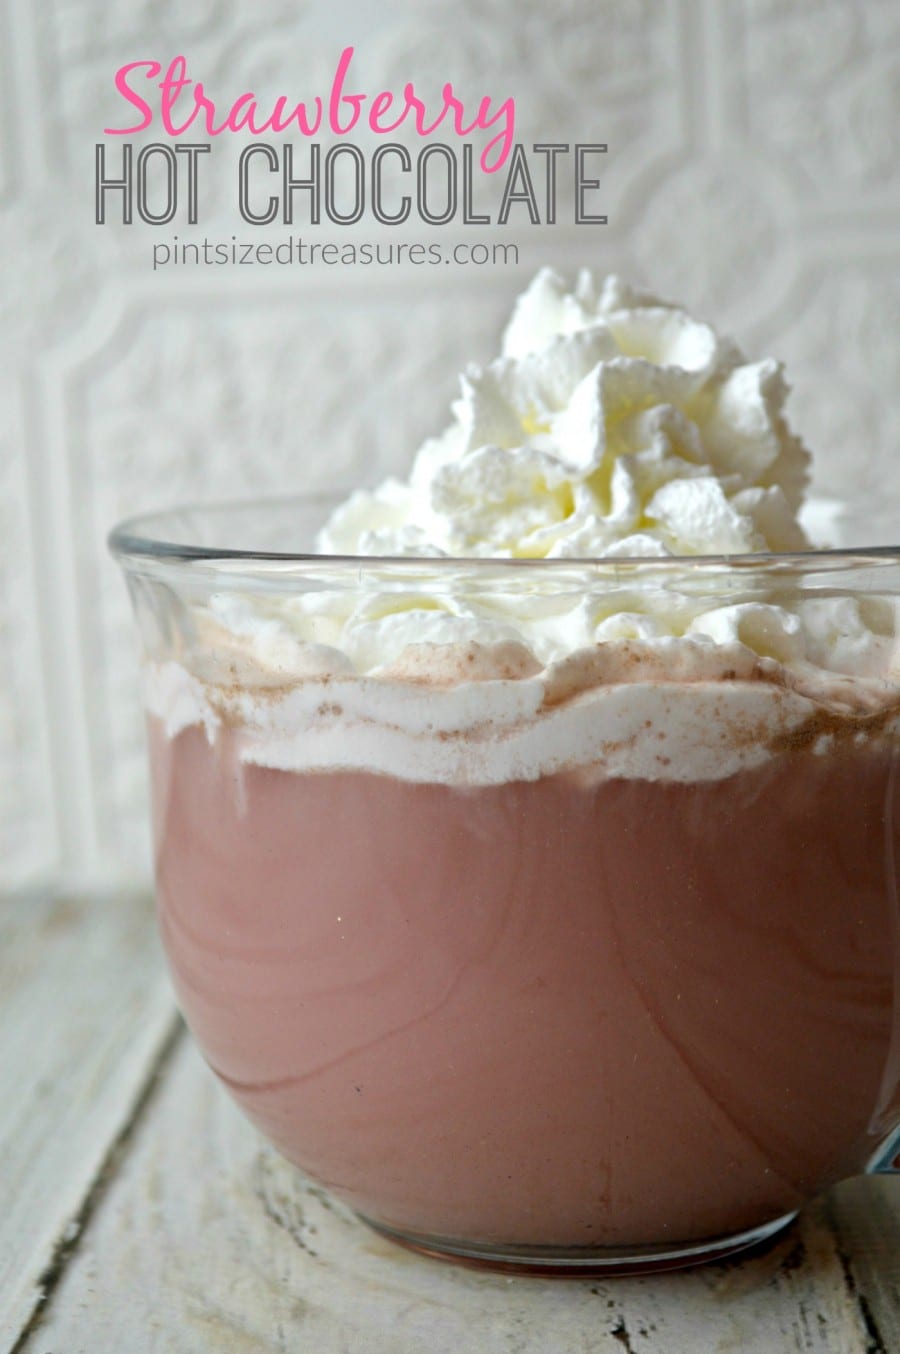 hot chocolate with strawberry recipe mix